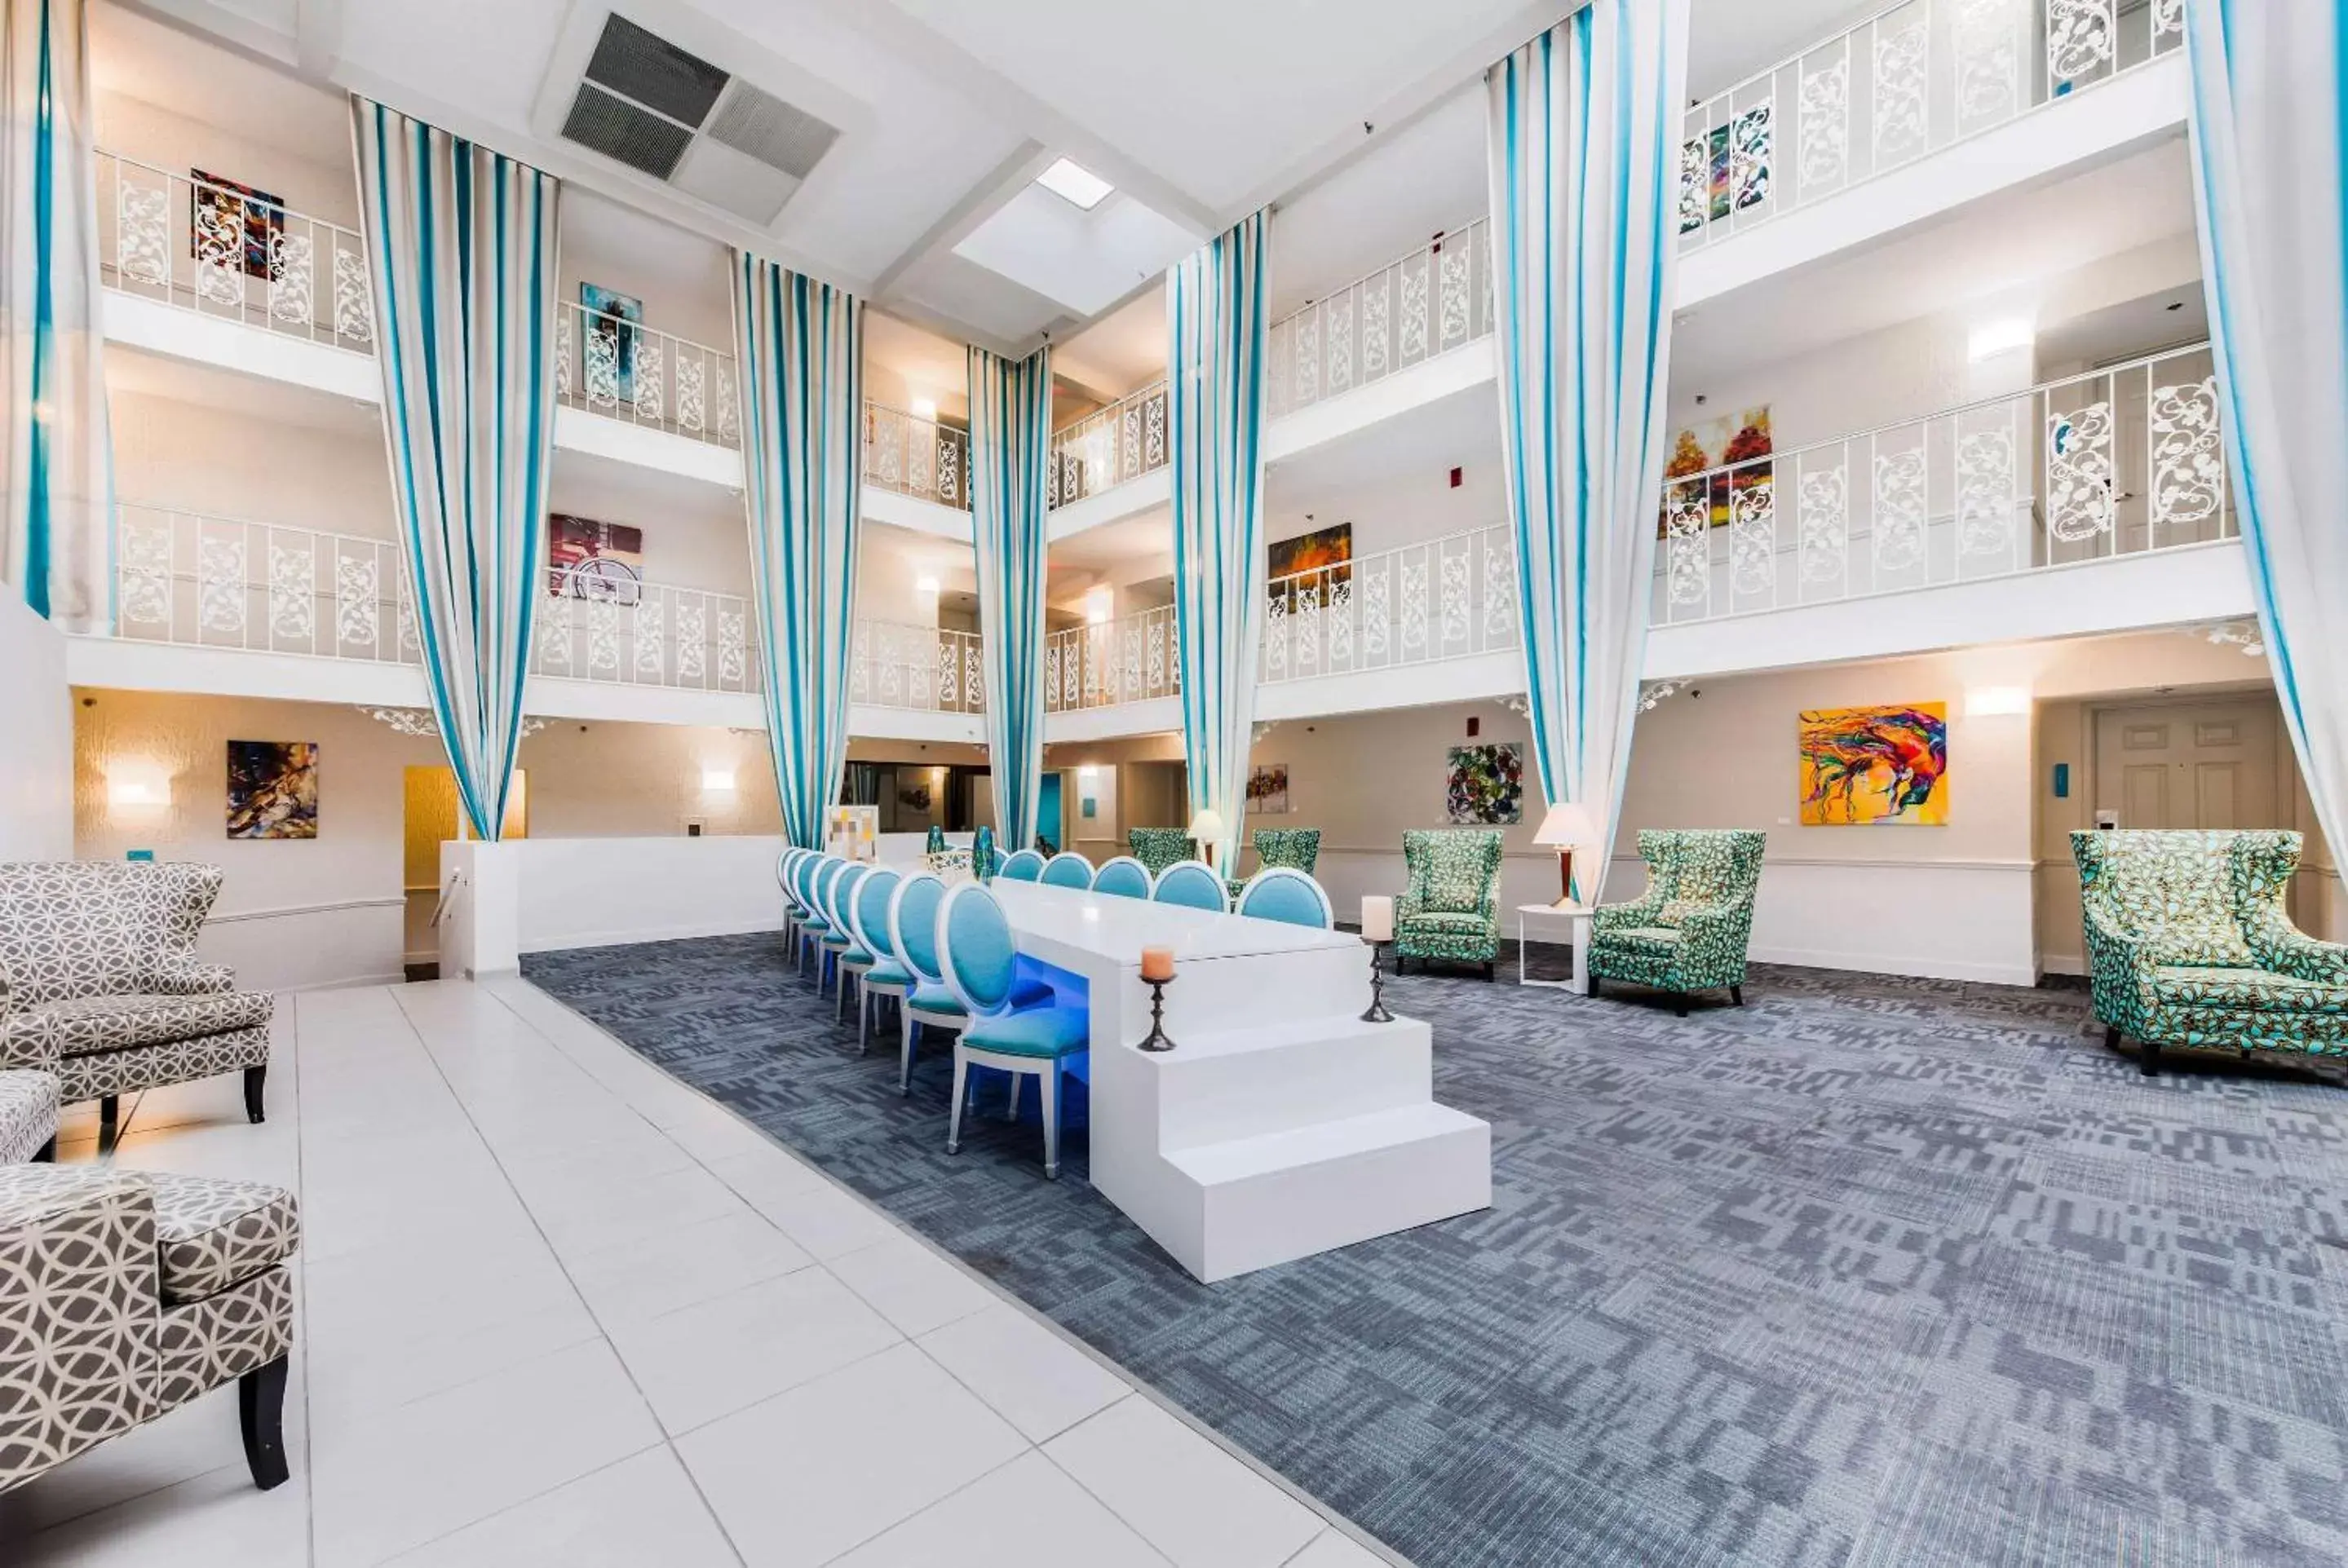 Lobby or reception in The Blu Hotel Blue Ash Cincinnati, Ascend Hotel Collection